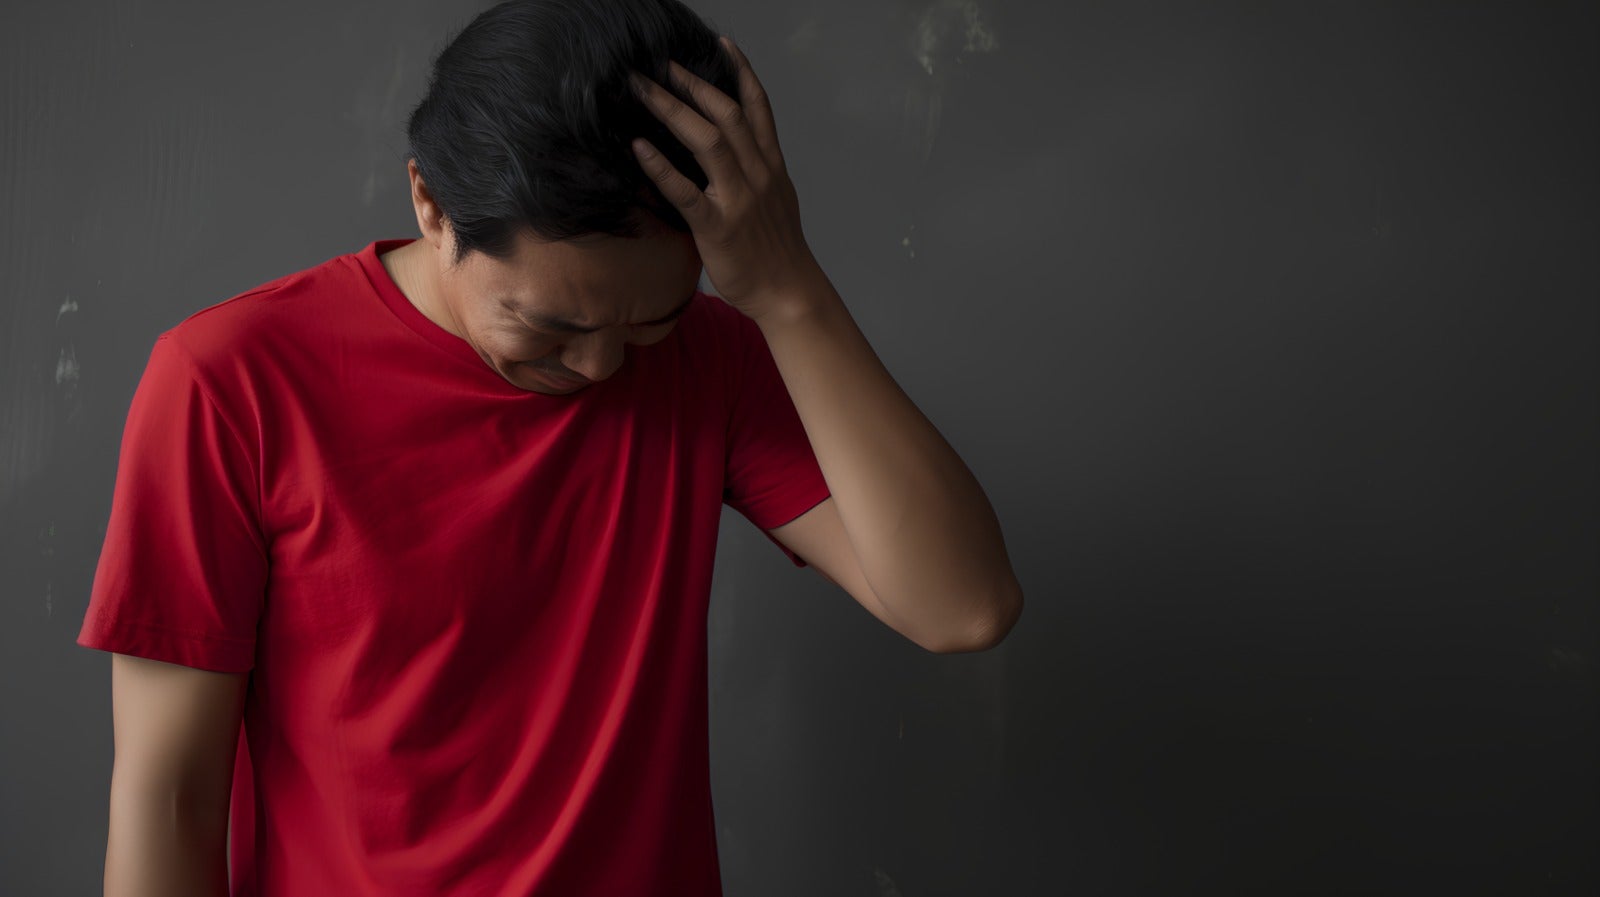 Man Headached Stressed Red T Shirt Depressed 123Rf